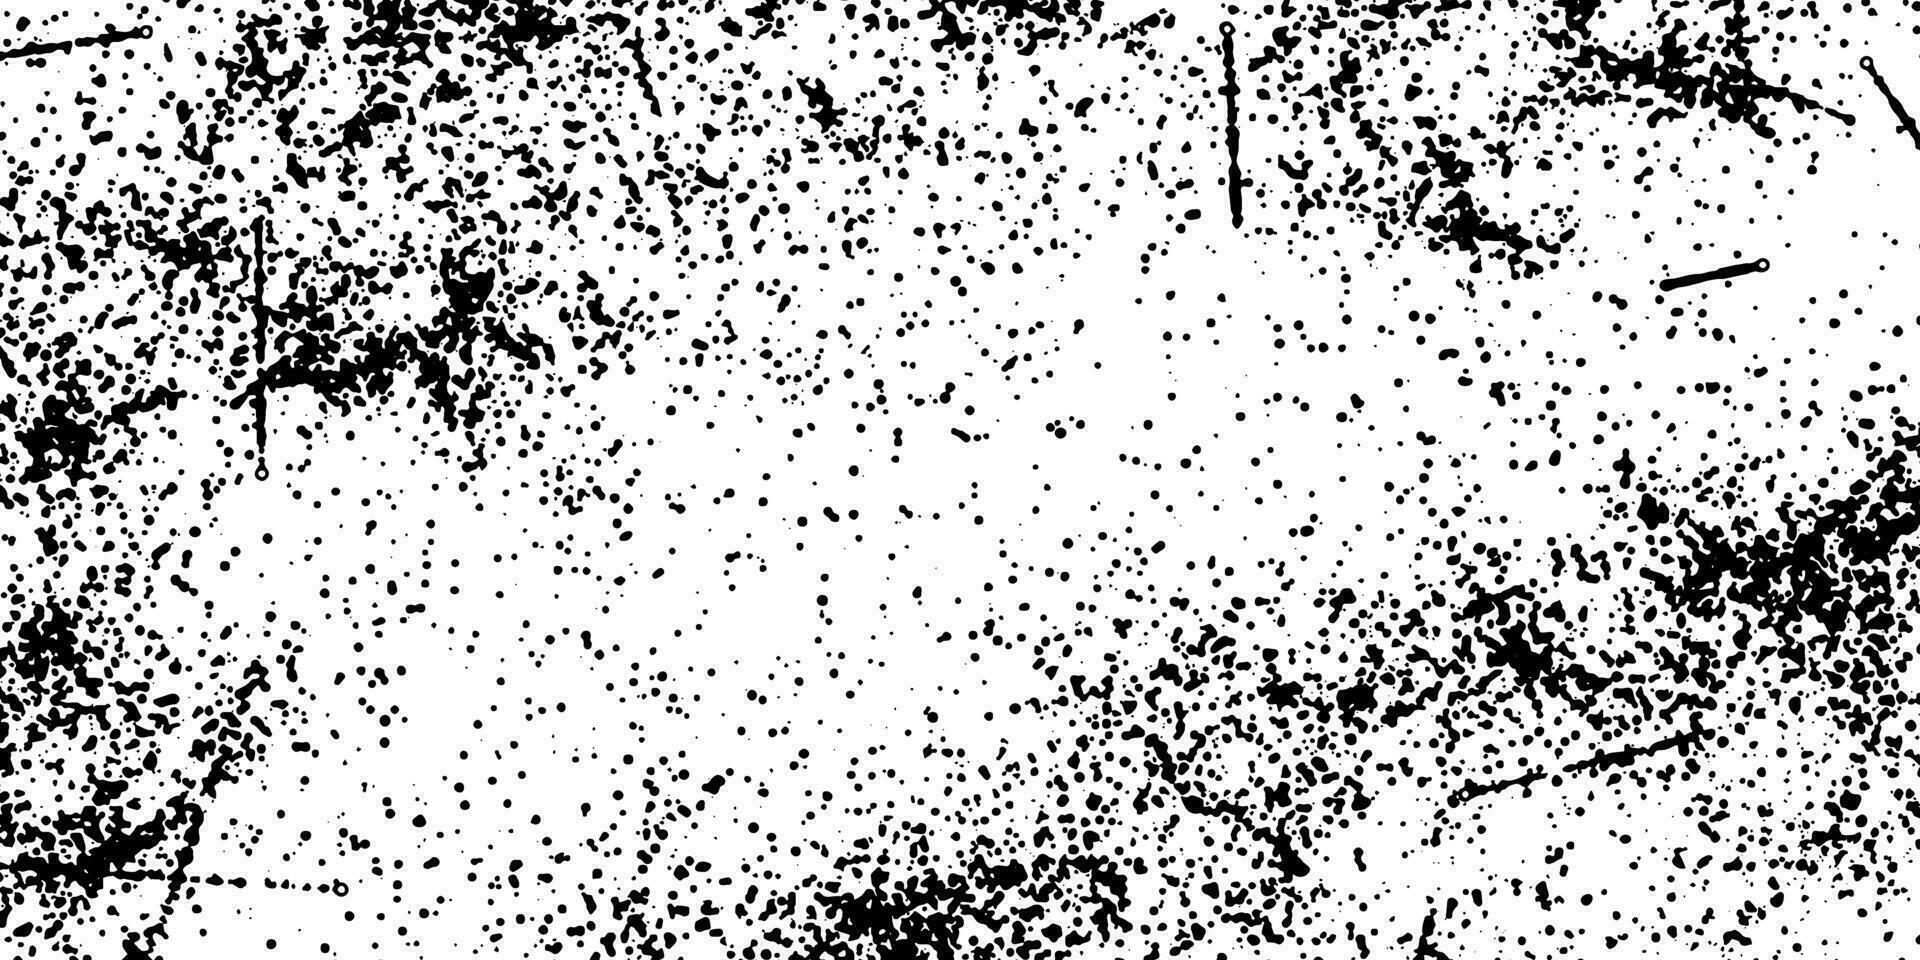 zwart en wit grunge textuur achtergrond vector